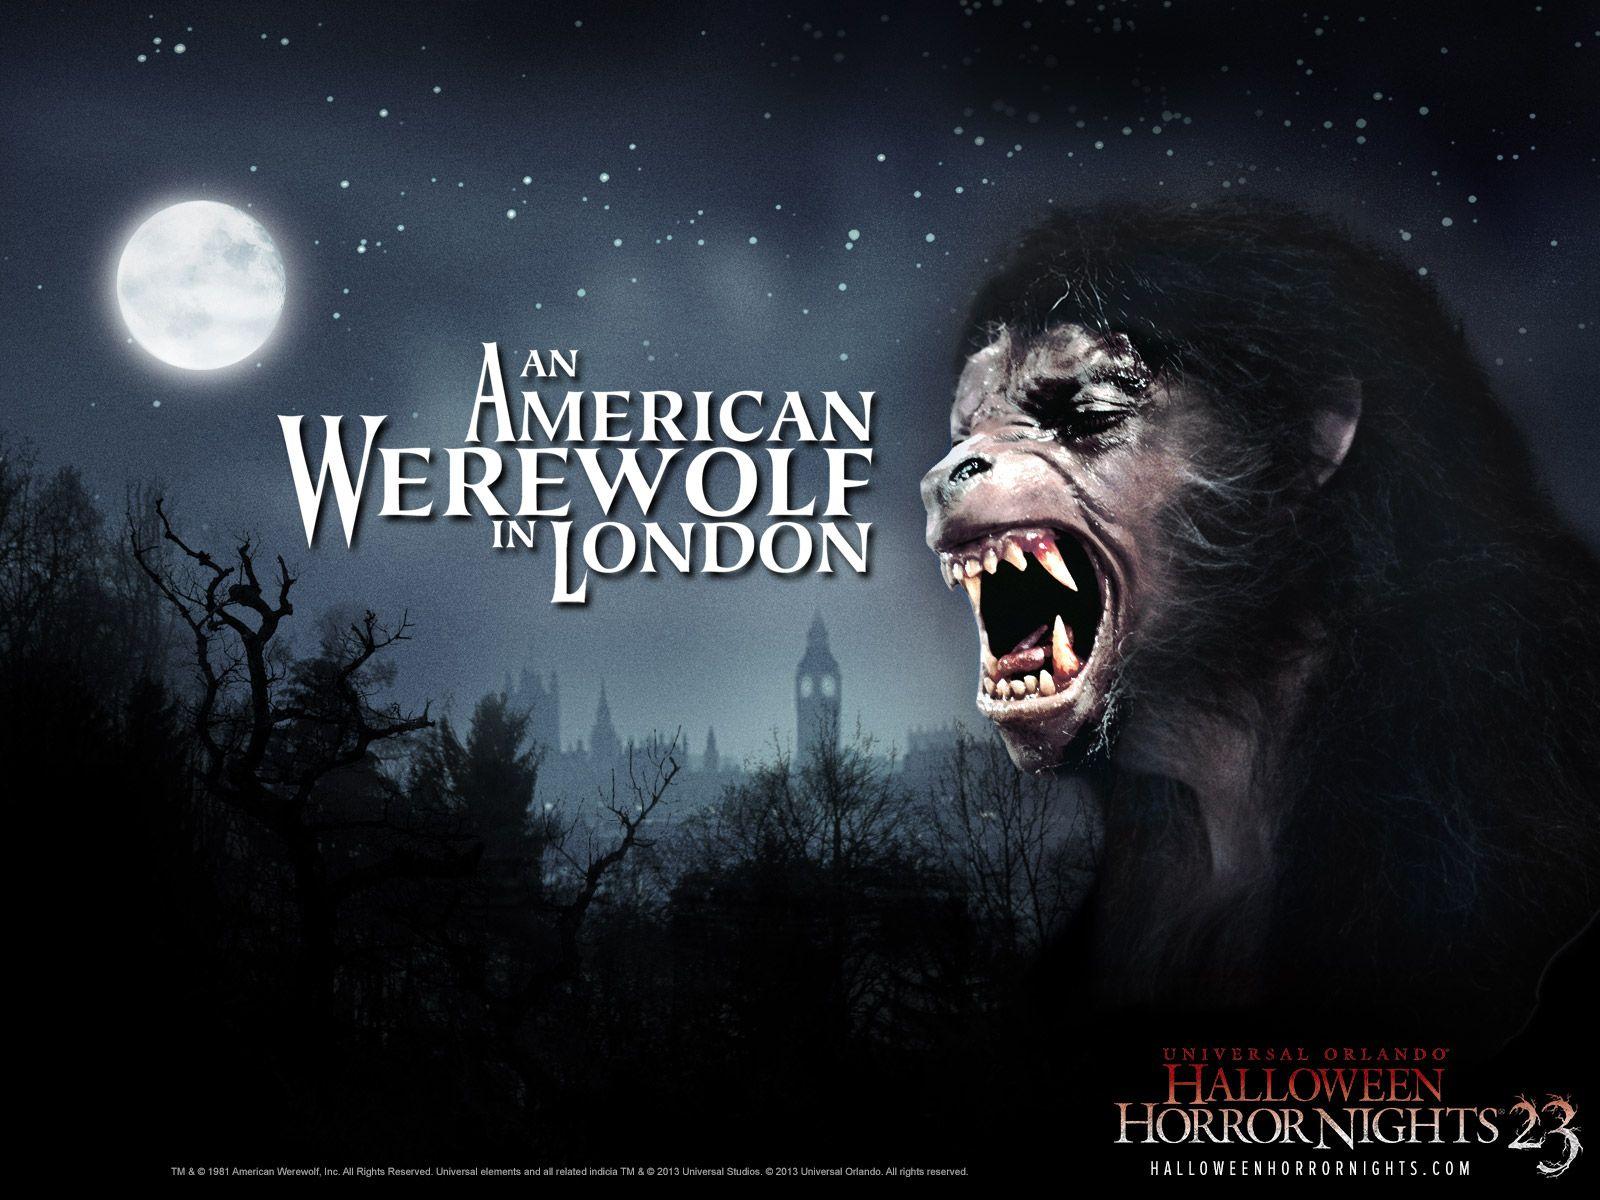 Halloween Horror Nights 2013 full reveal for Universal Orlando